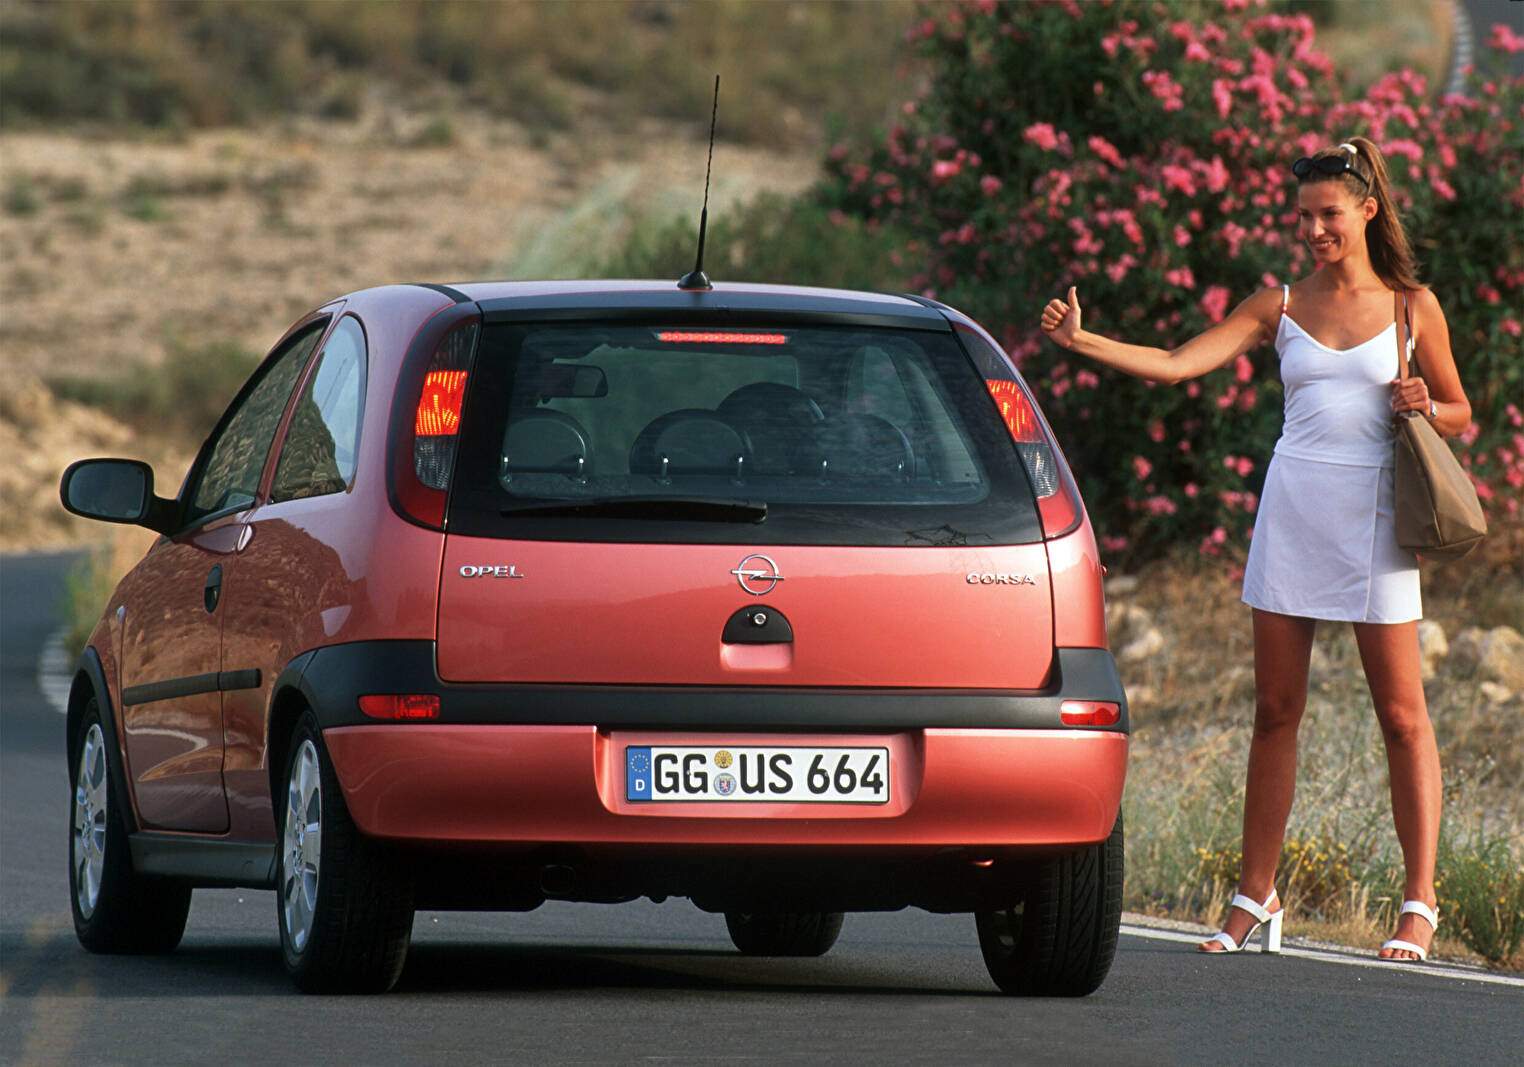 Opel Corsa III 1.2 16v (C) (2001-2004),  ajouté par fox58